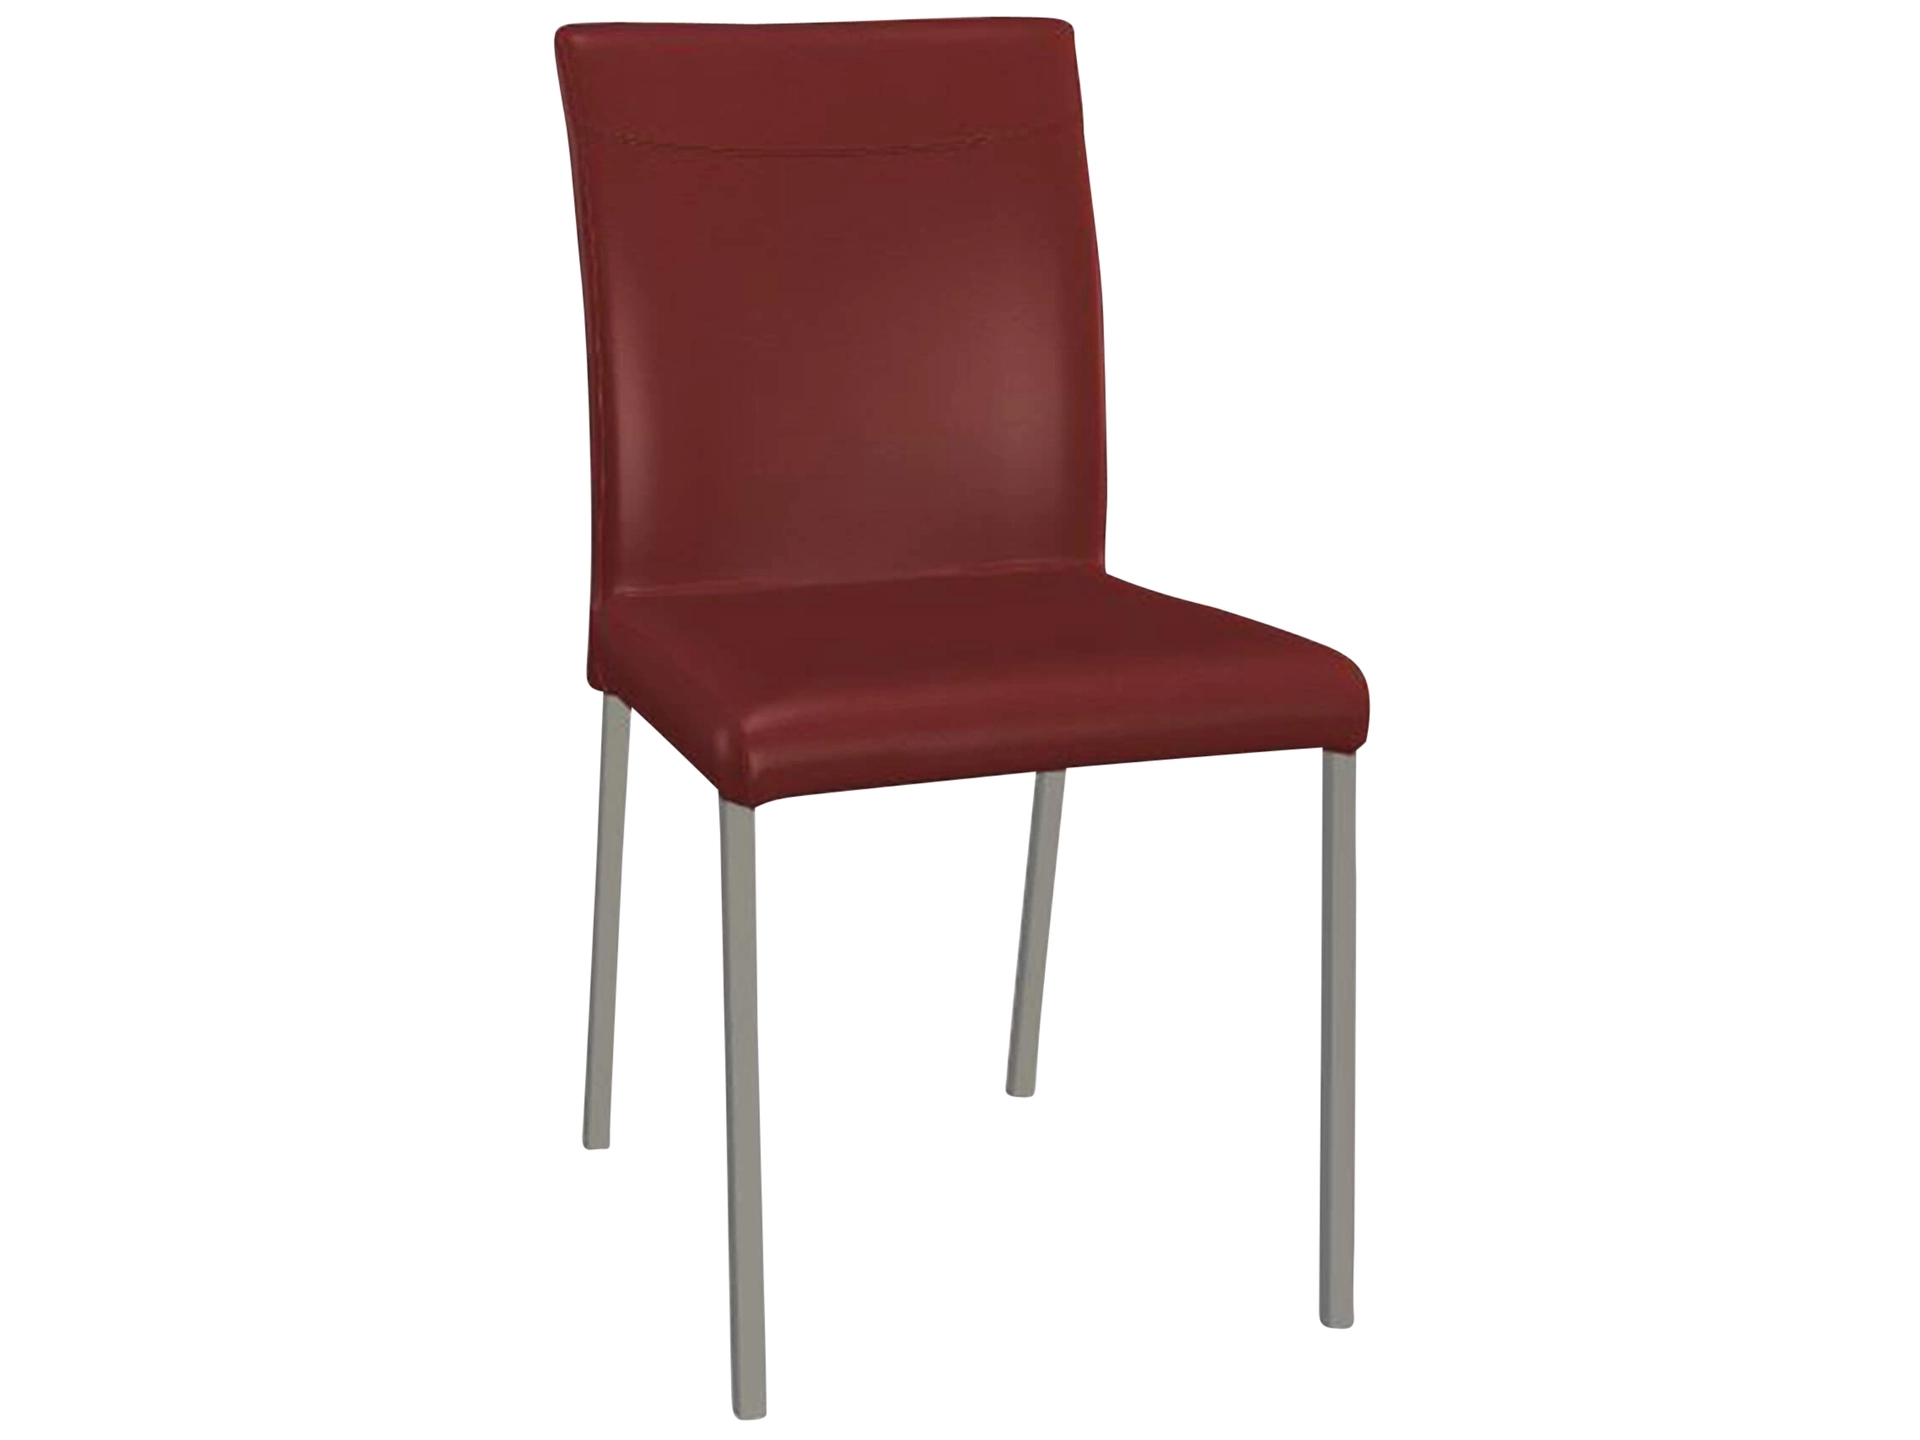 Stuhl Leicht Premium Trendstühle / Farbe: Red / Material: Leder